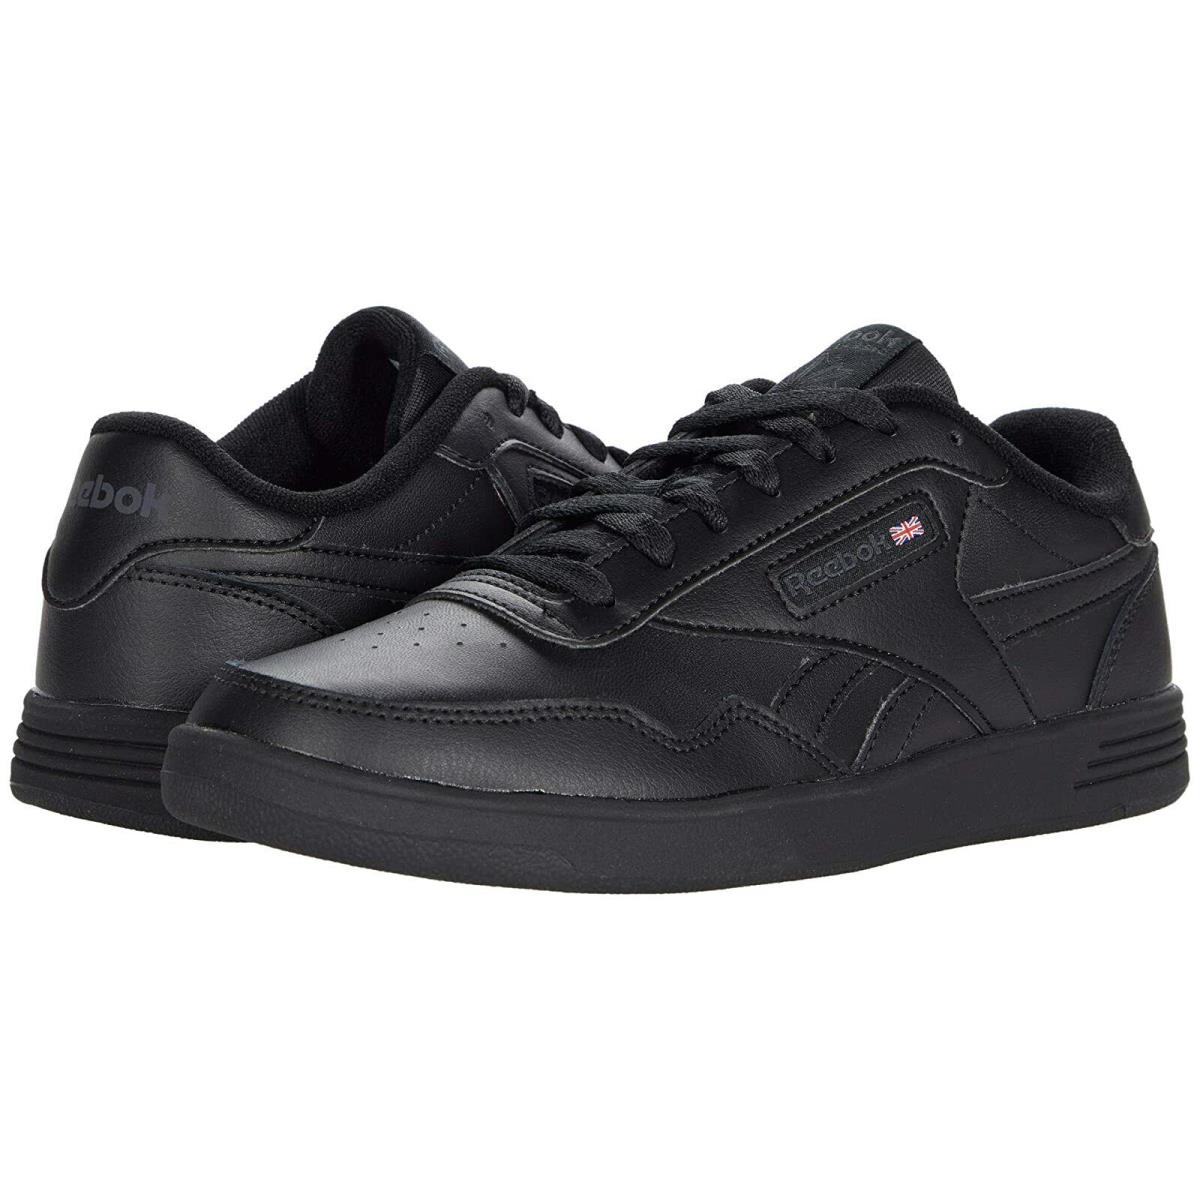 Reebok Club Memt Black/black Memory Foam Men Tennis Shoes Synthetic Leather - Black/Black